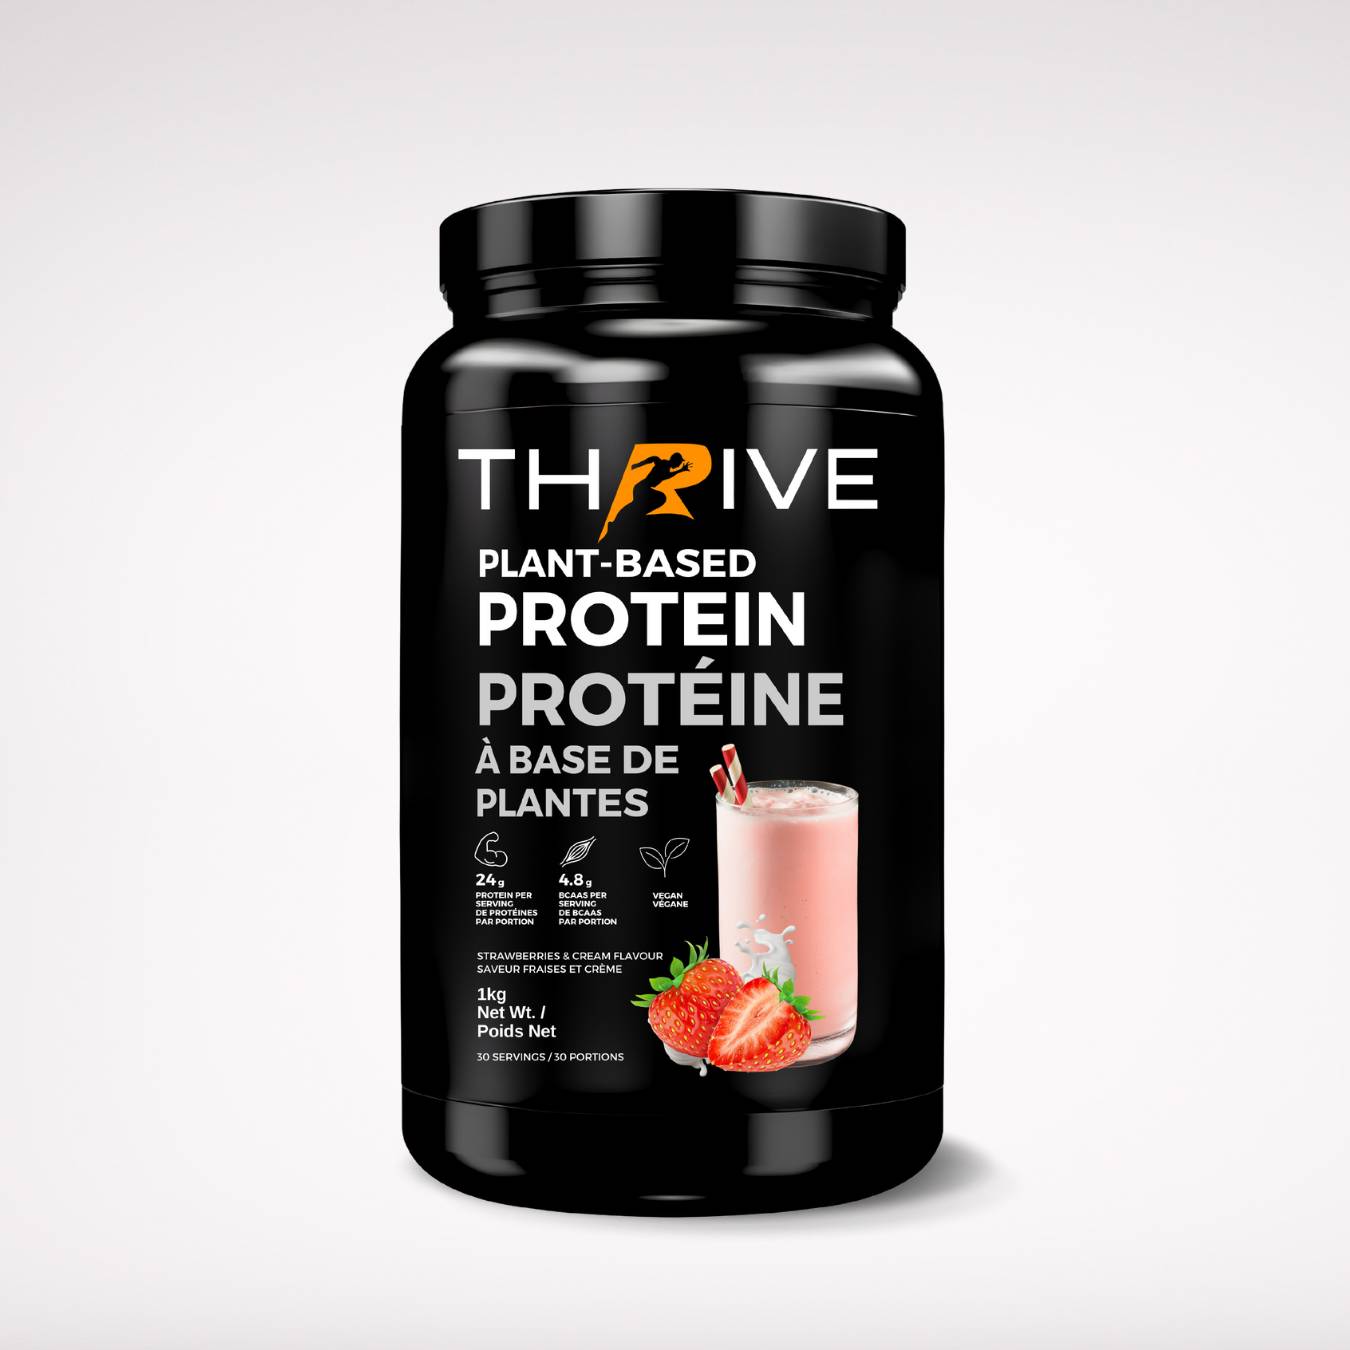 Thrive Plant-Based Protein Strawberries & Cream (1 Unit)